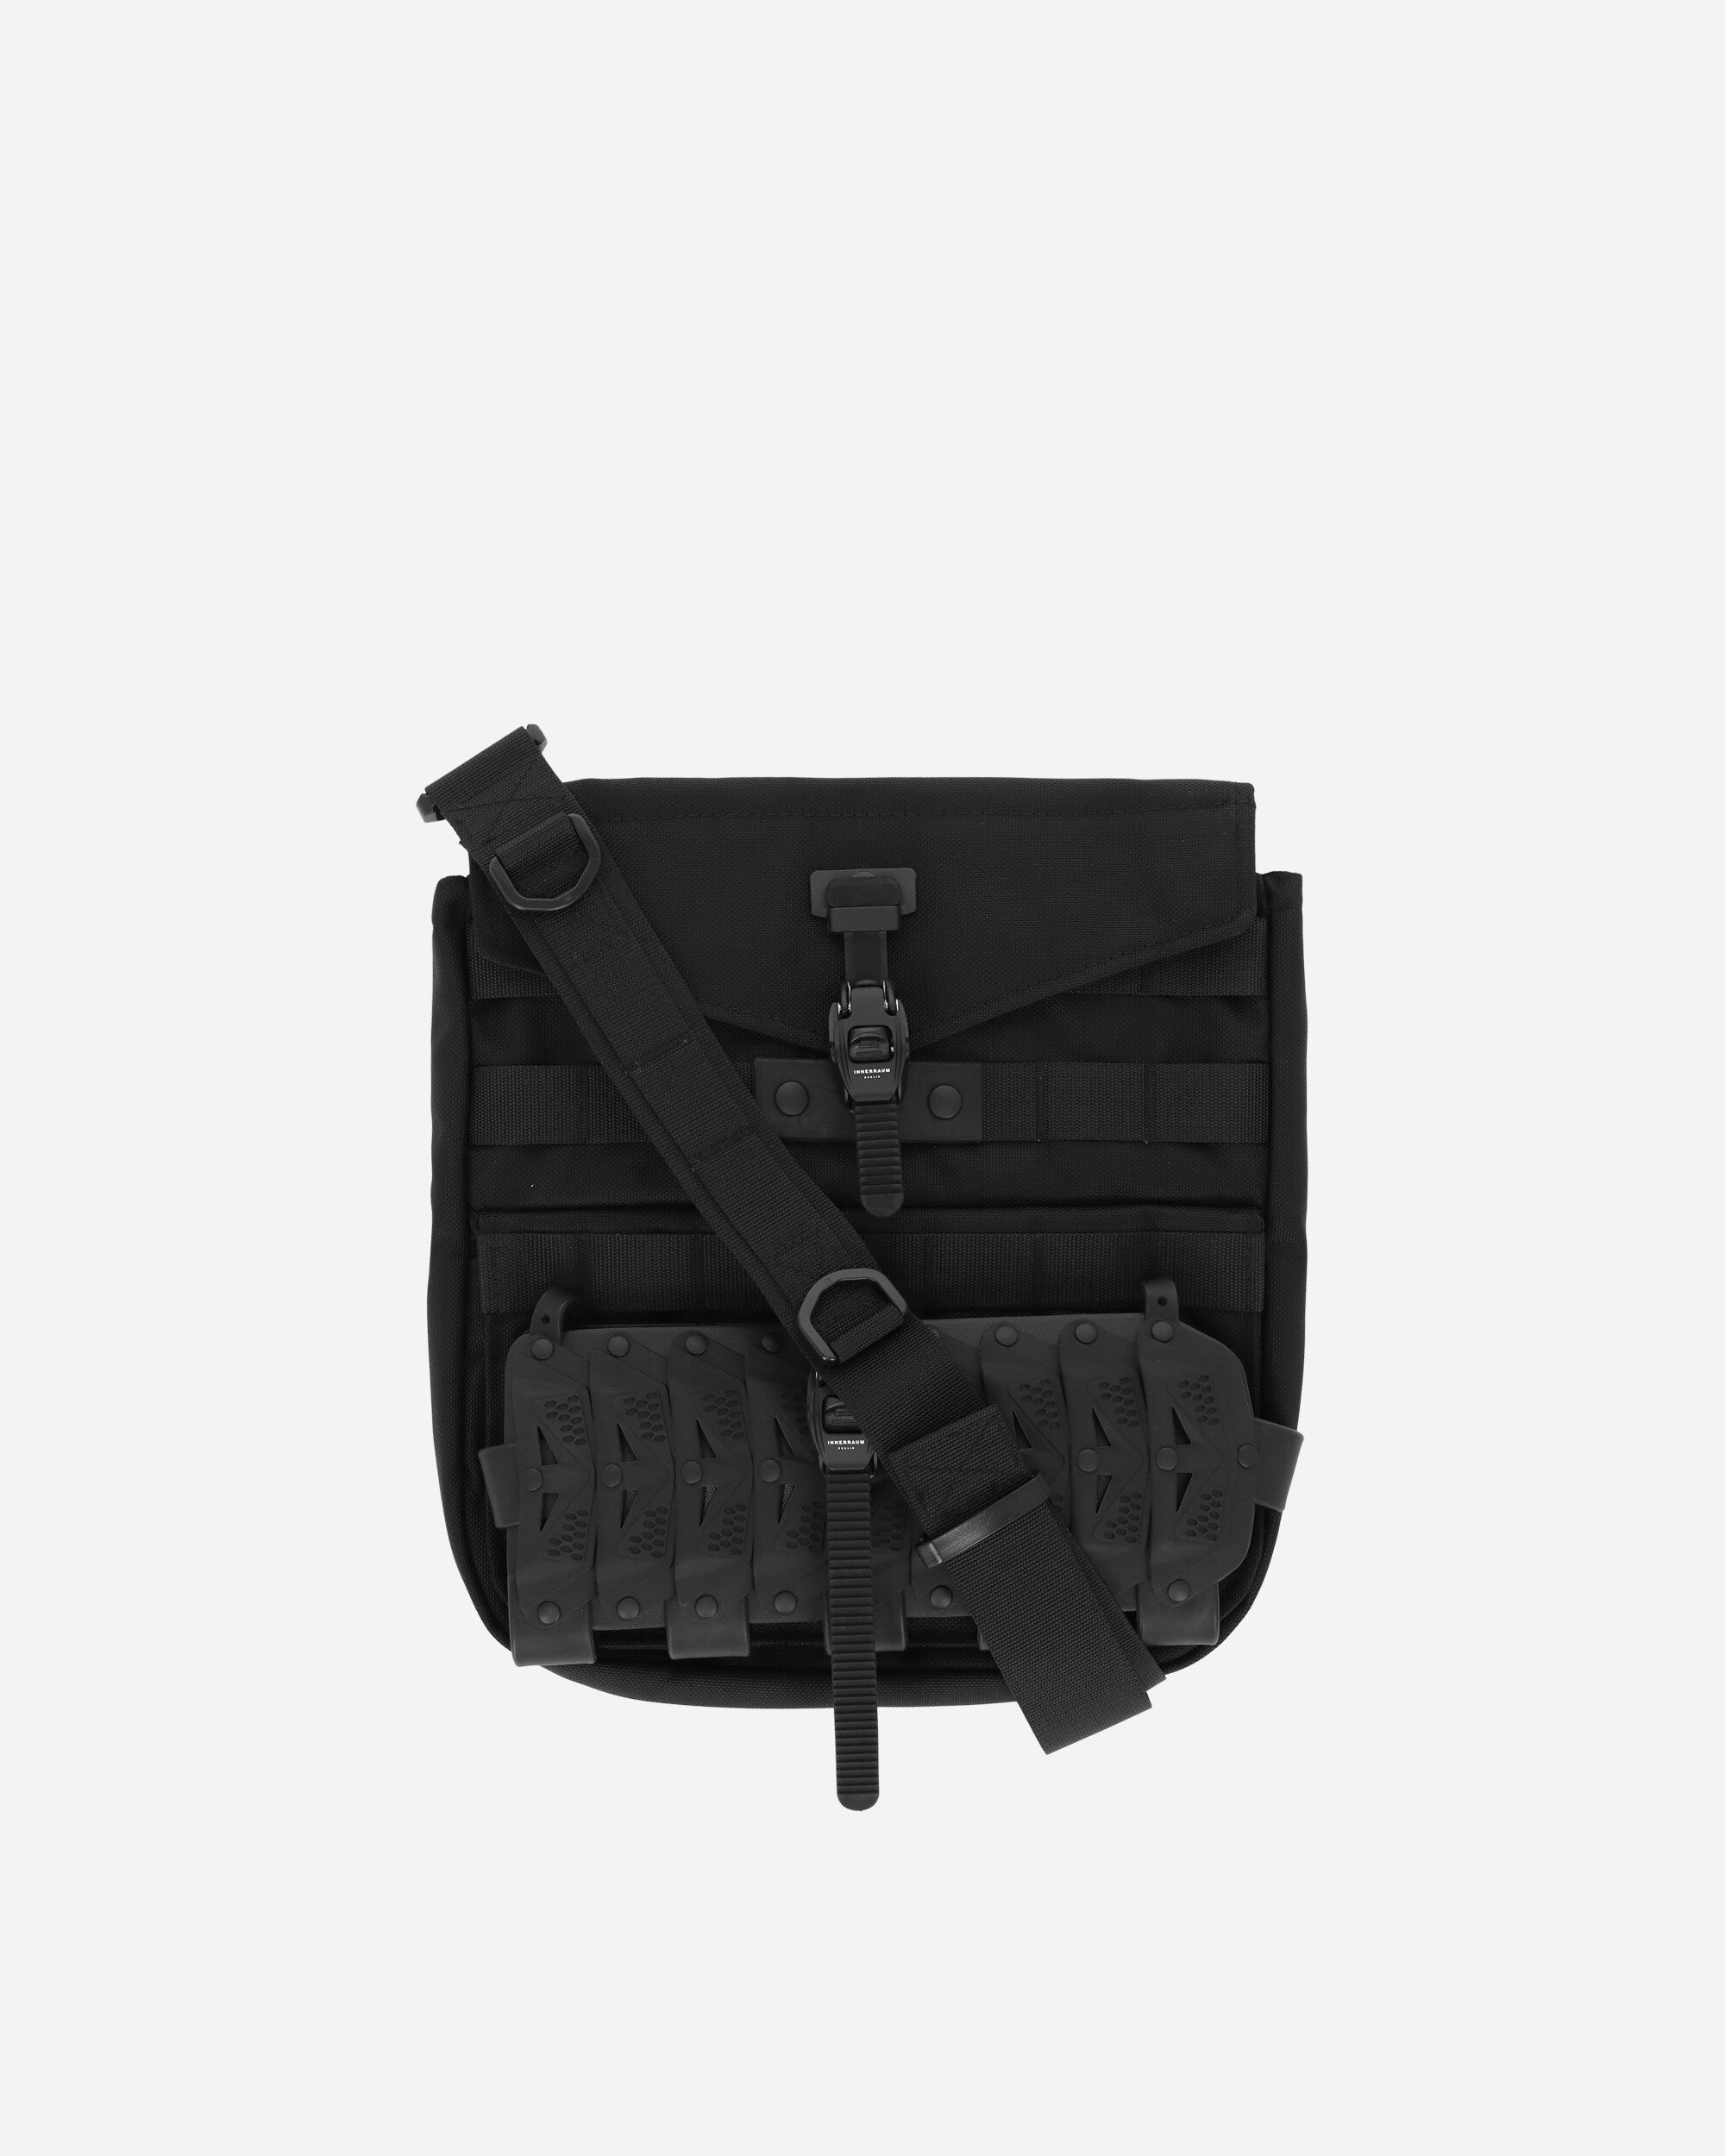 INNERRAUM Shoulder Bag Black